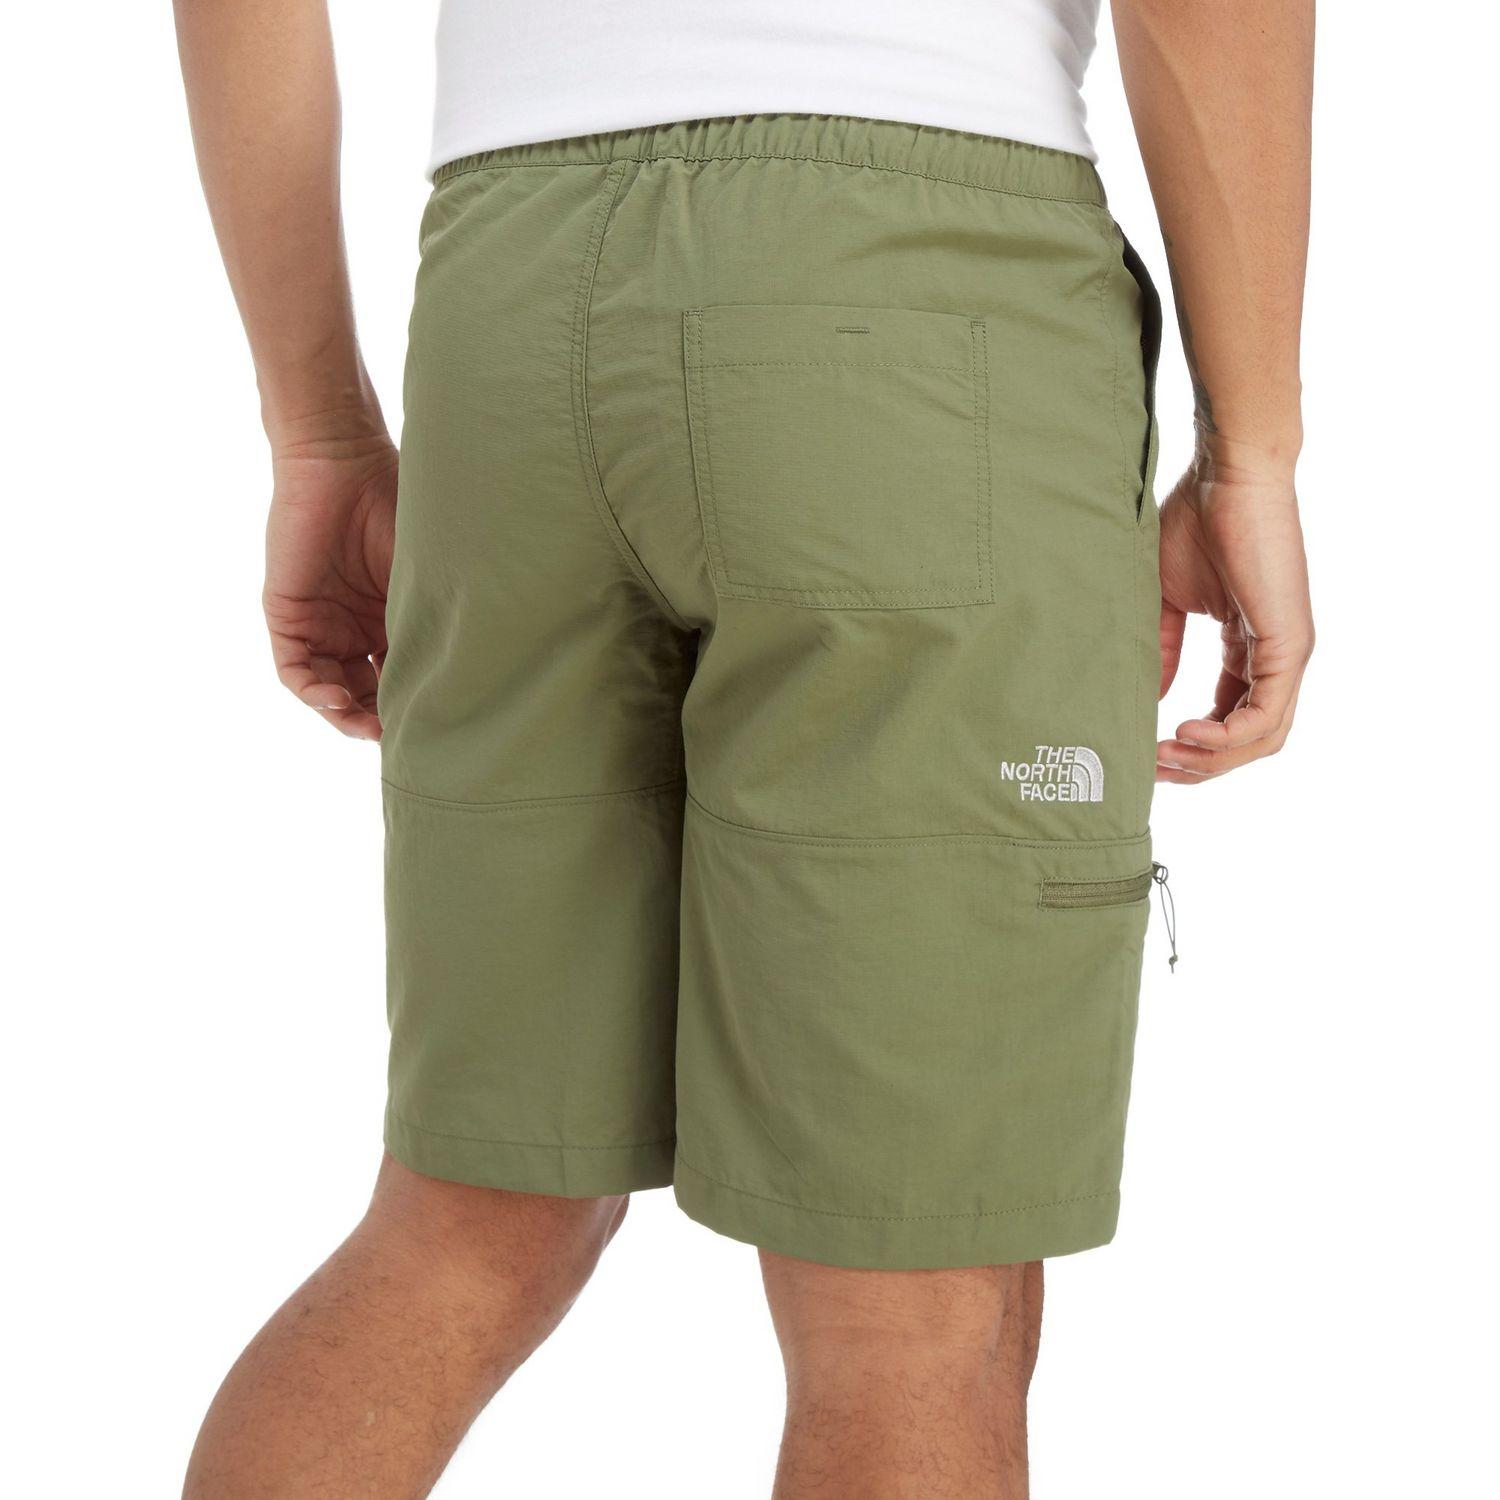 Z-pocket Woven Shorts in Khaki 